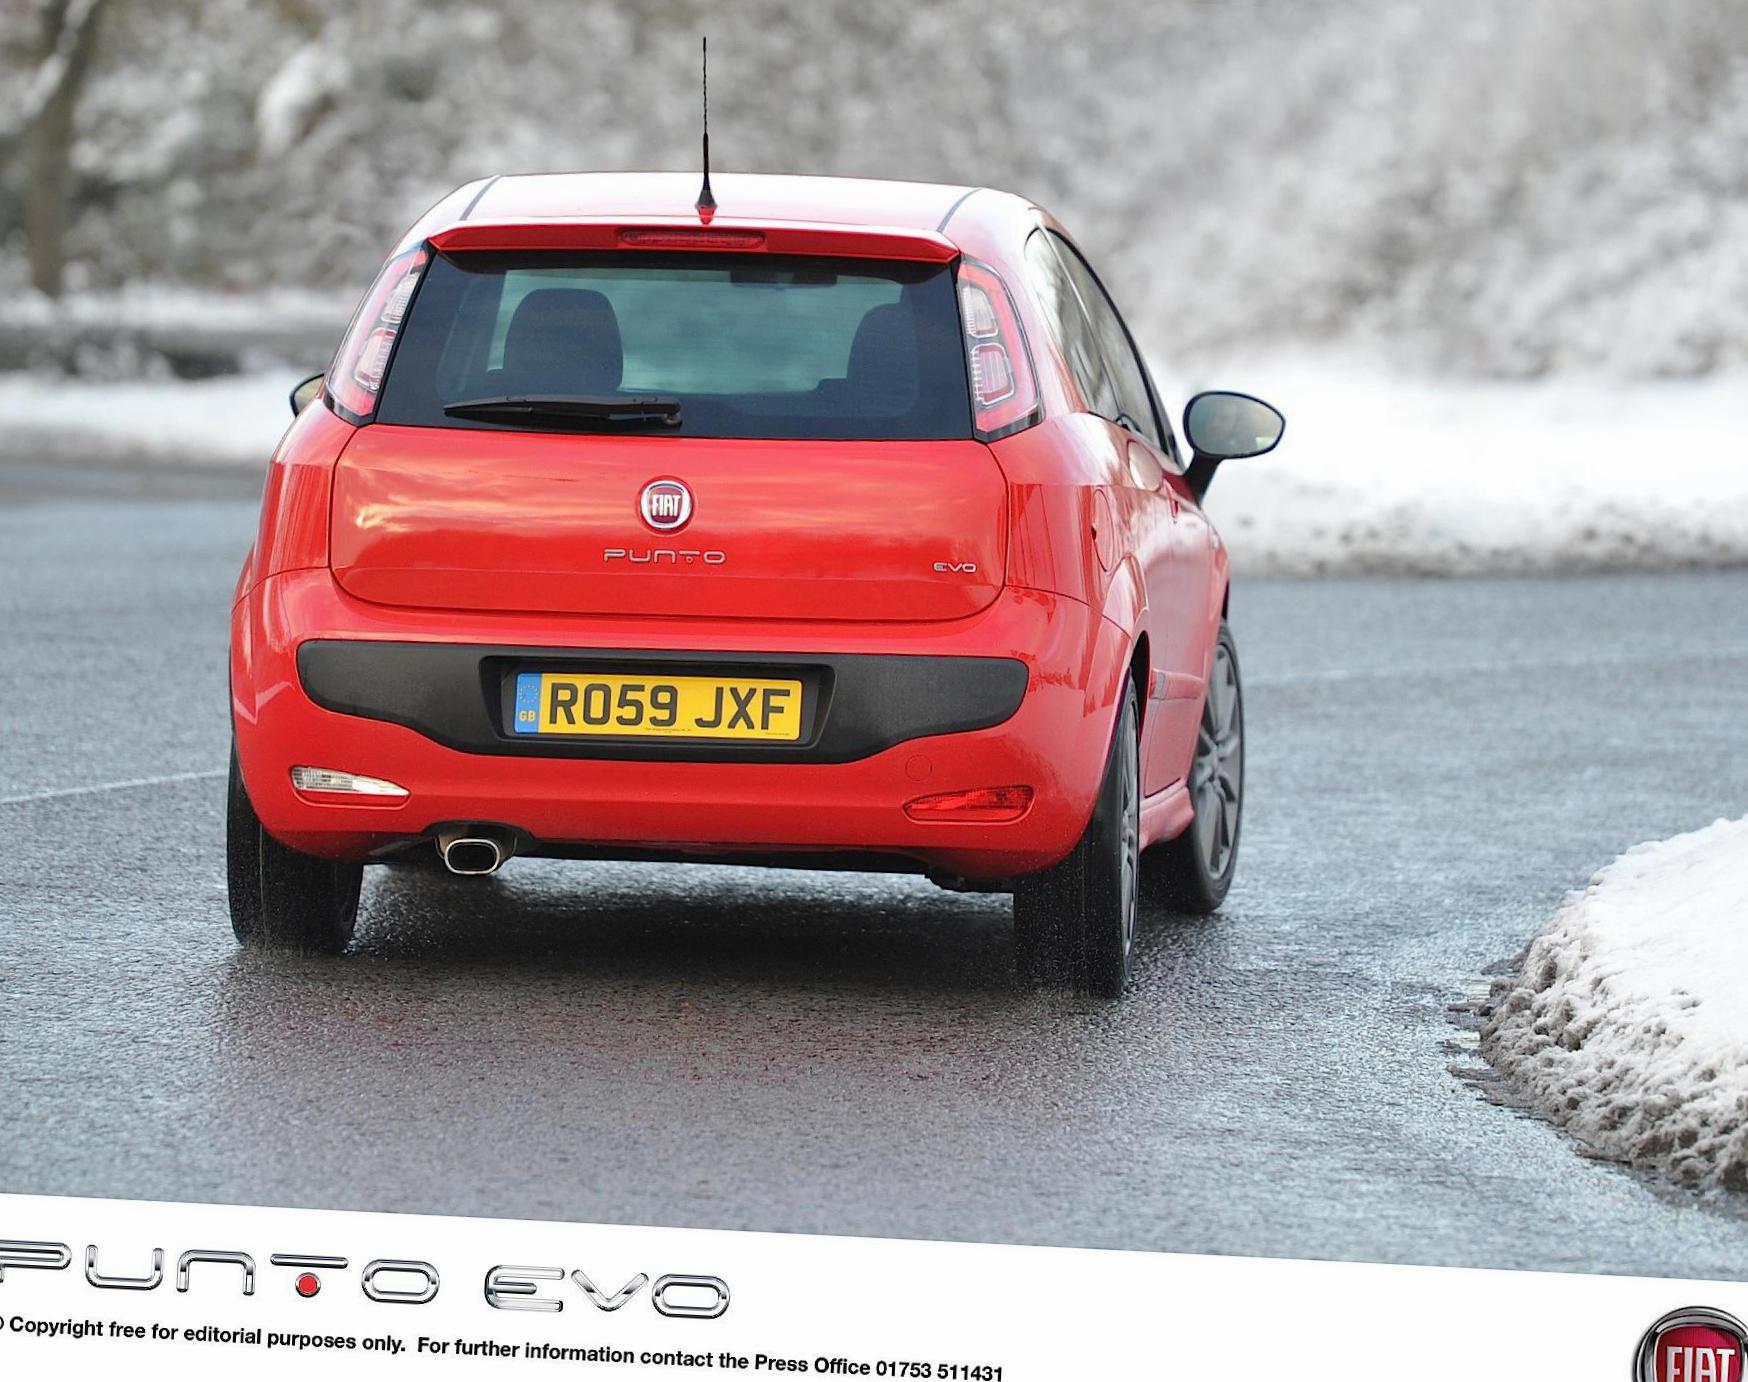 Fiat Punto Evo 3 doors review 2010